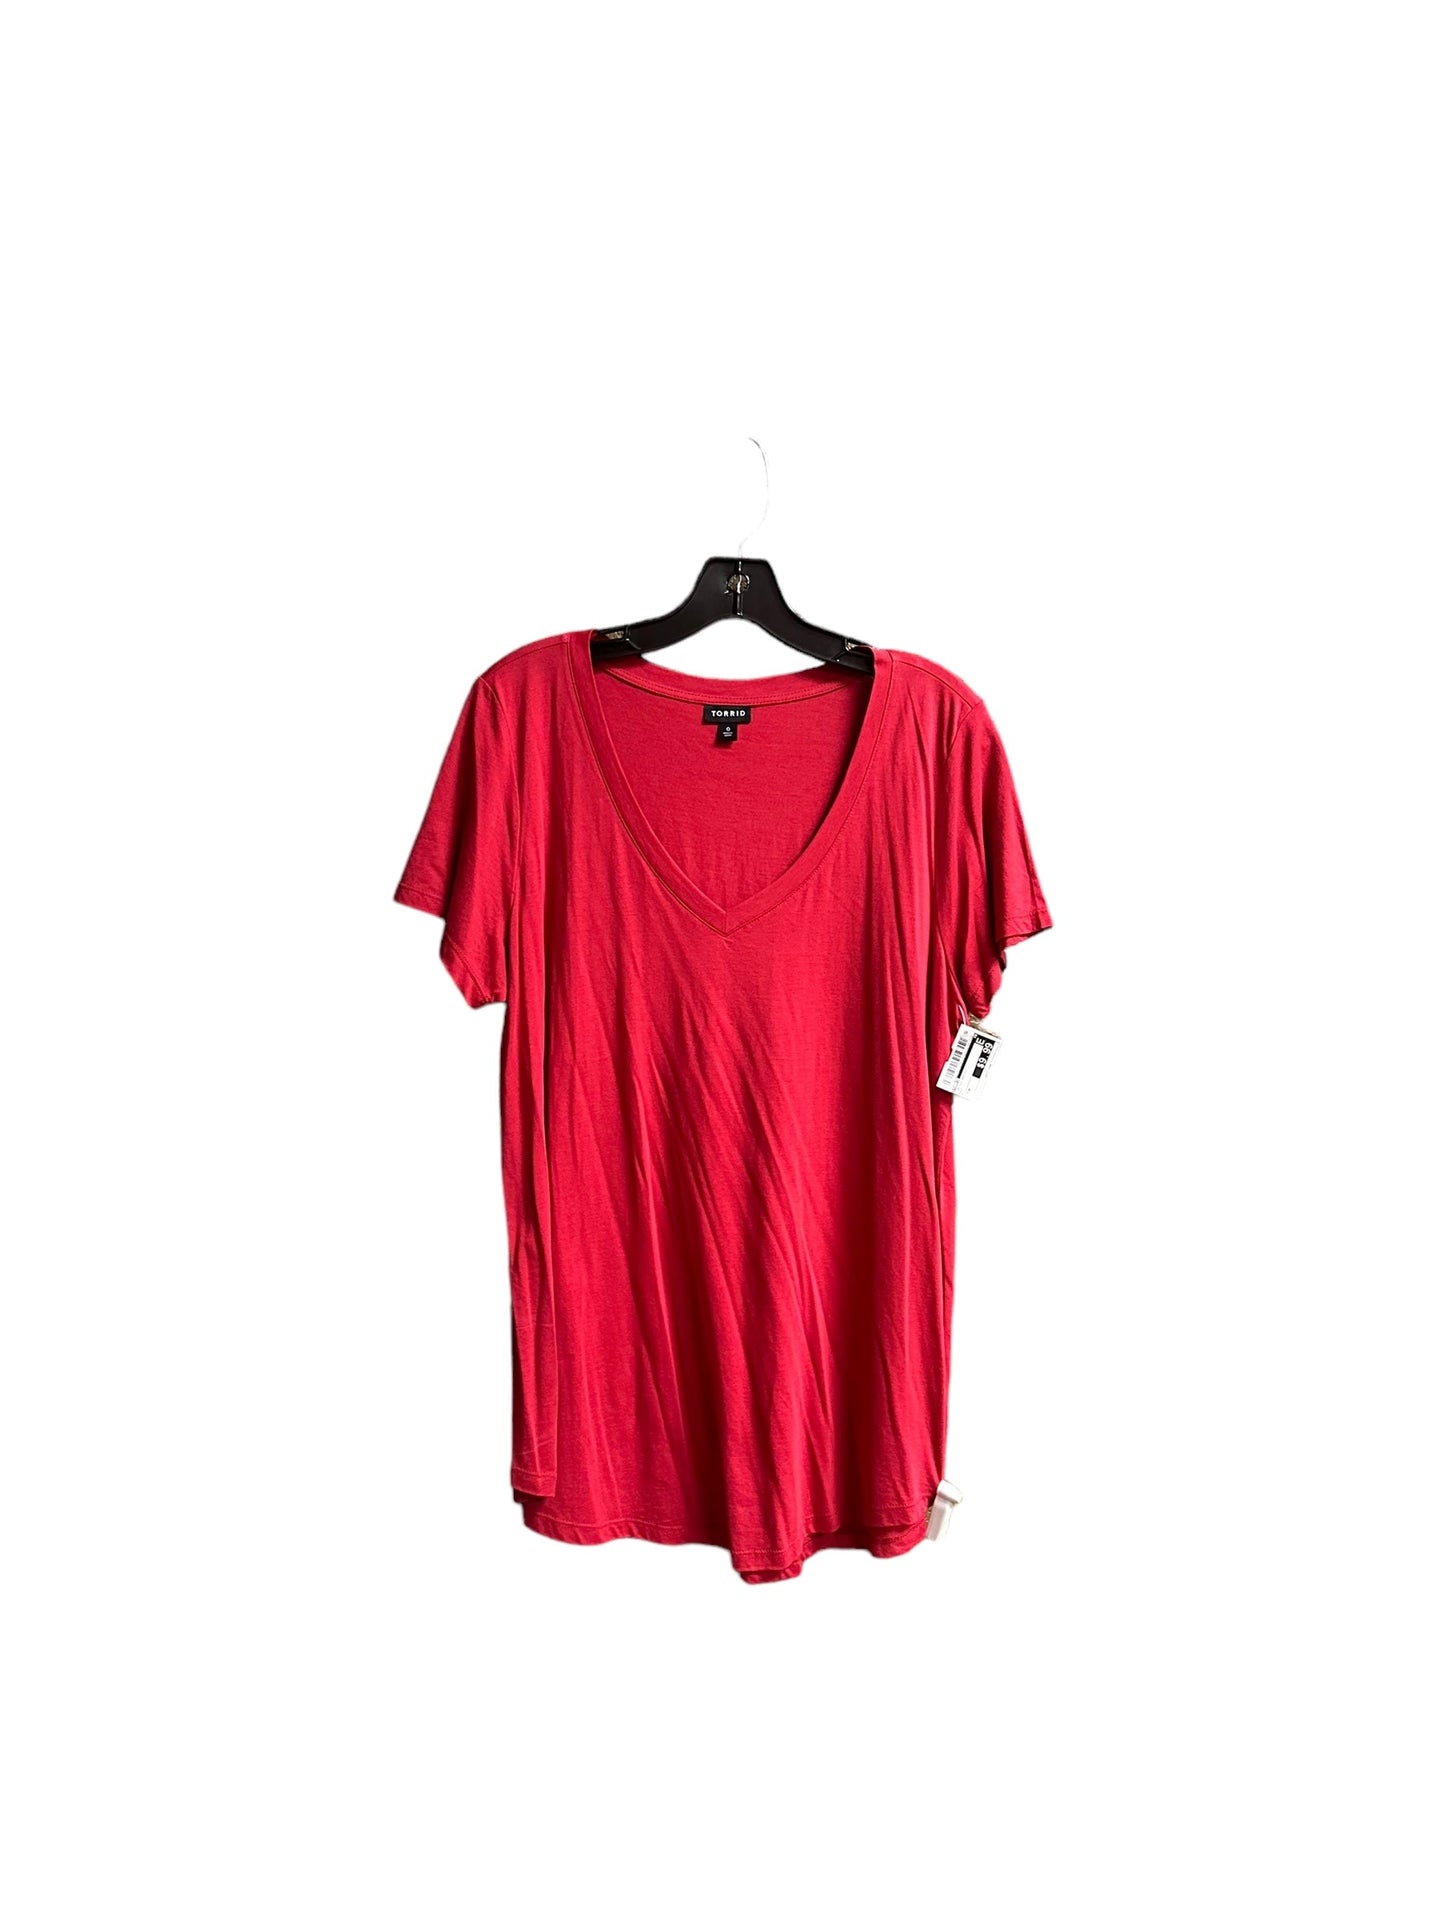 Red Top Short Sleeve Basic Torrid, Size M